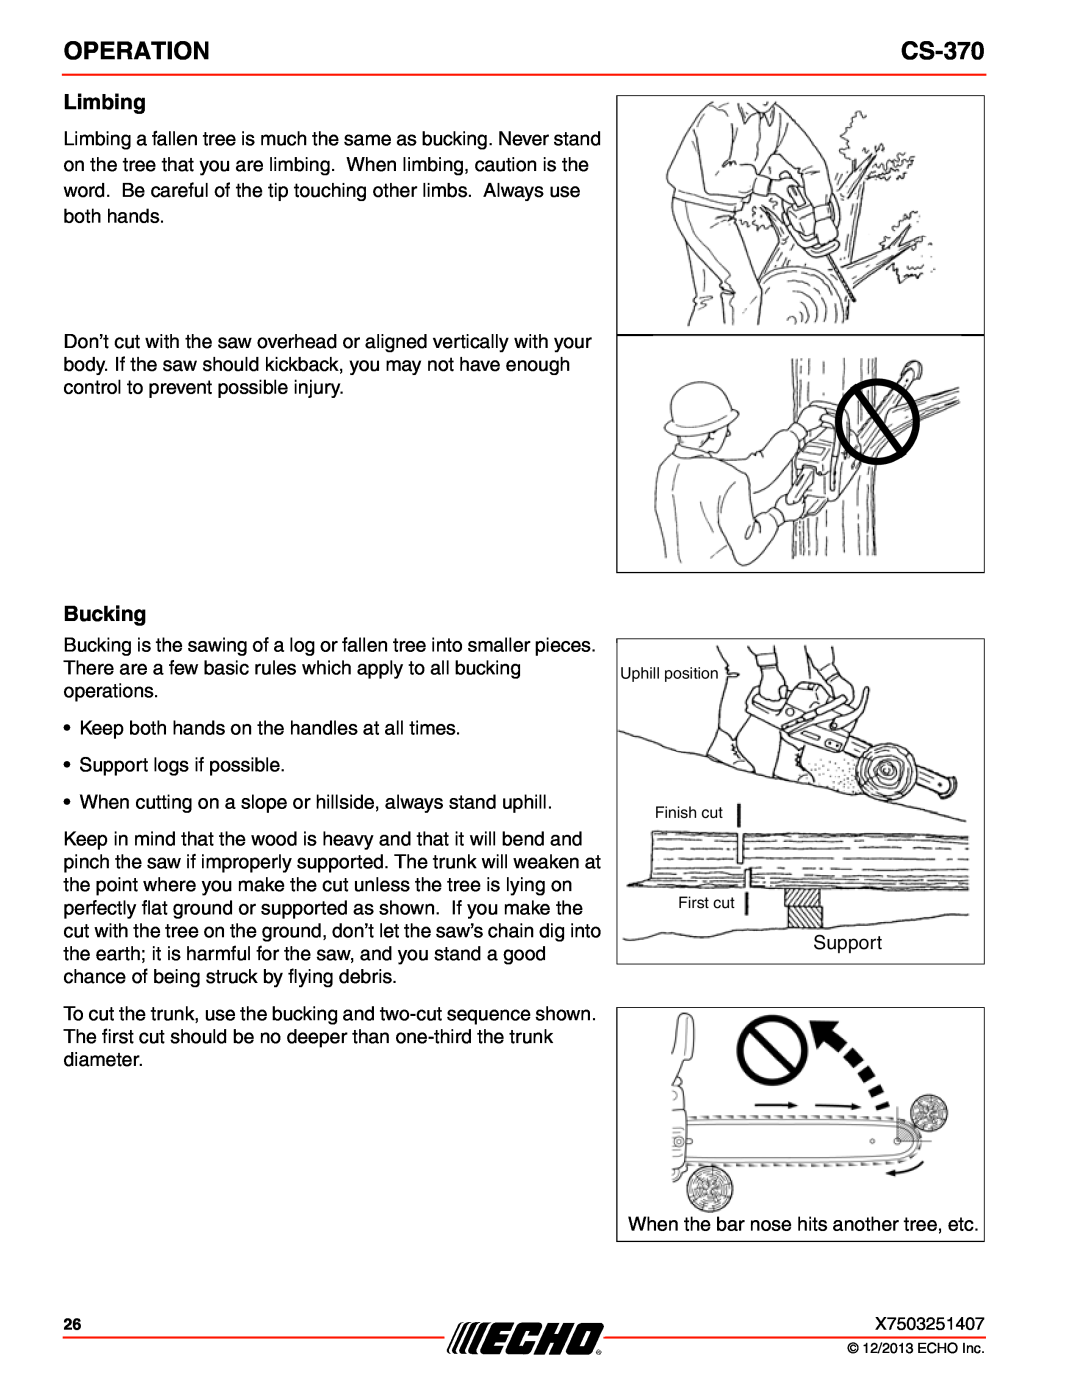 Echo CS-370 instruction manual Limbing, Bucking, Operation 